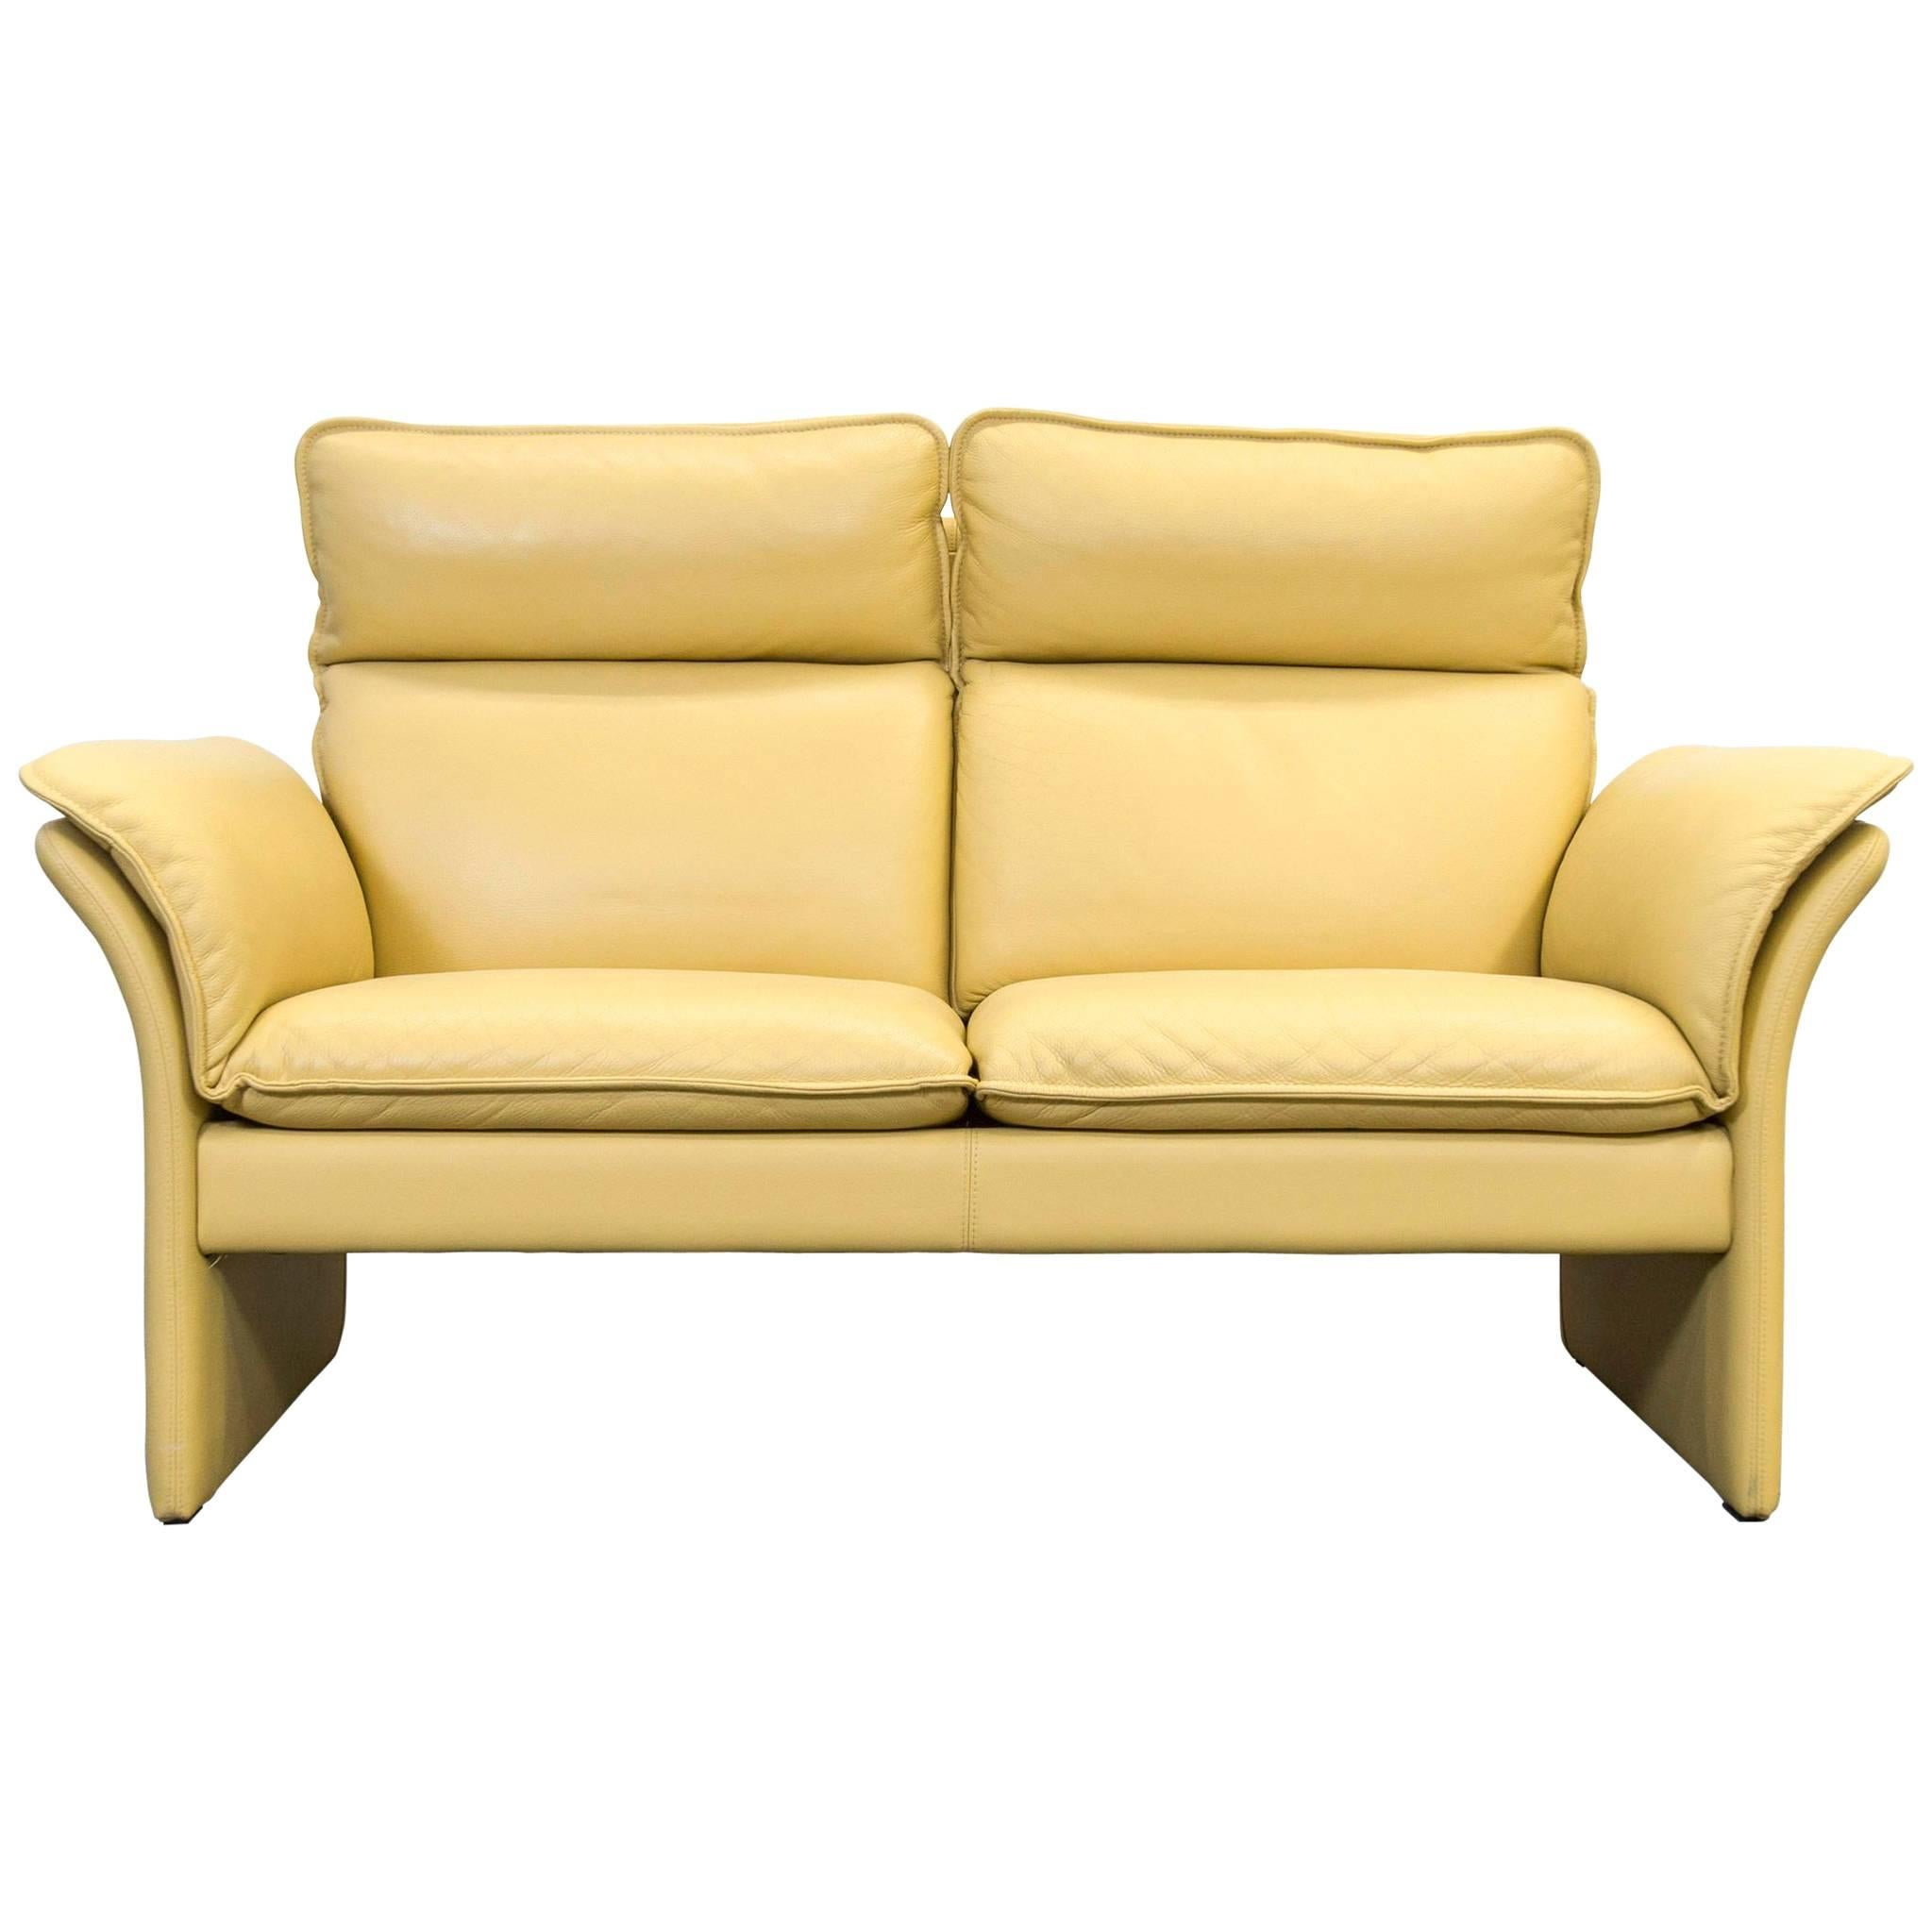 Dreipunkt Designer Leather Sofa Mustard Yellow Two-Seat Couch Modern